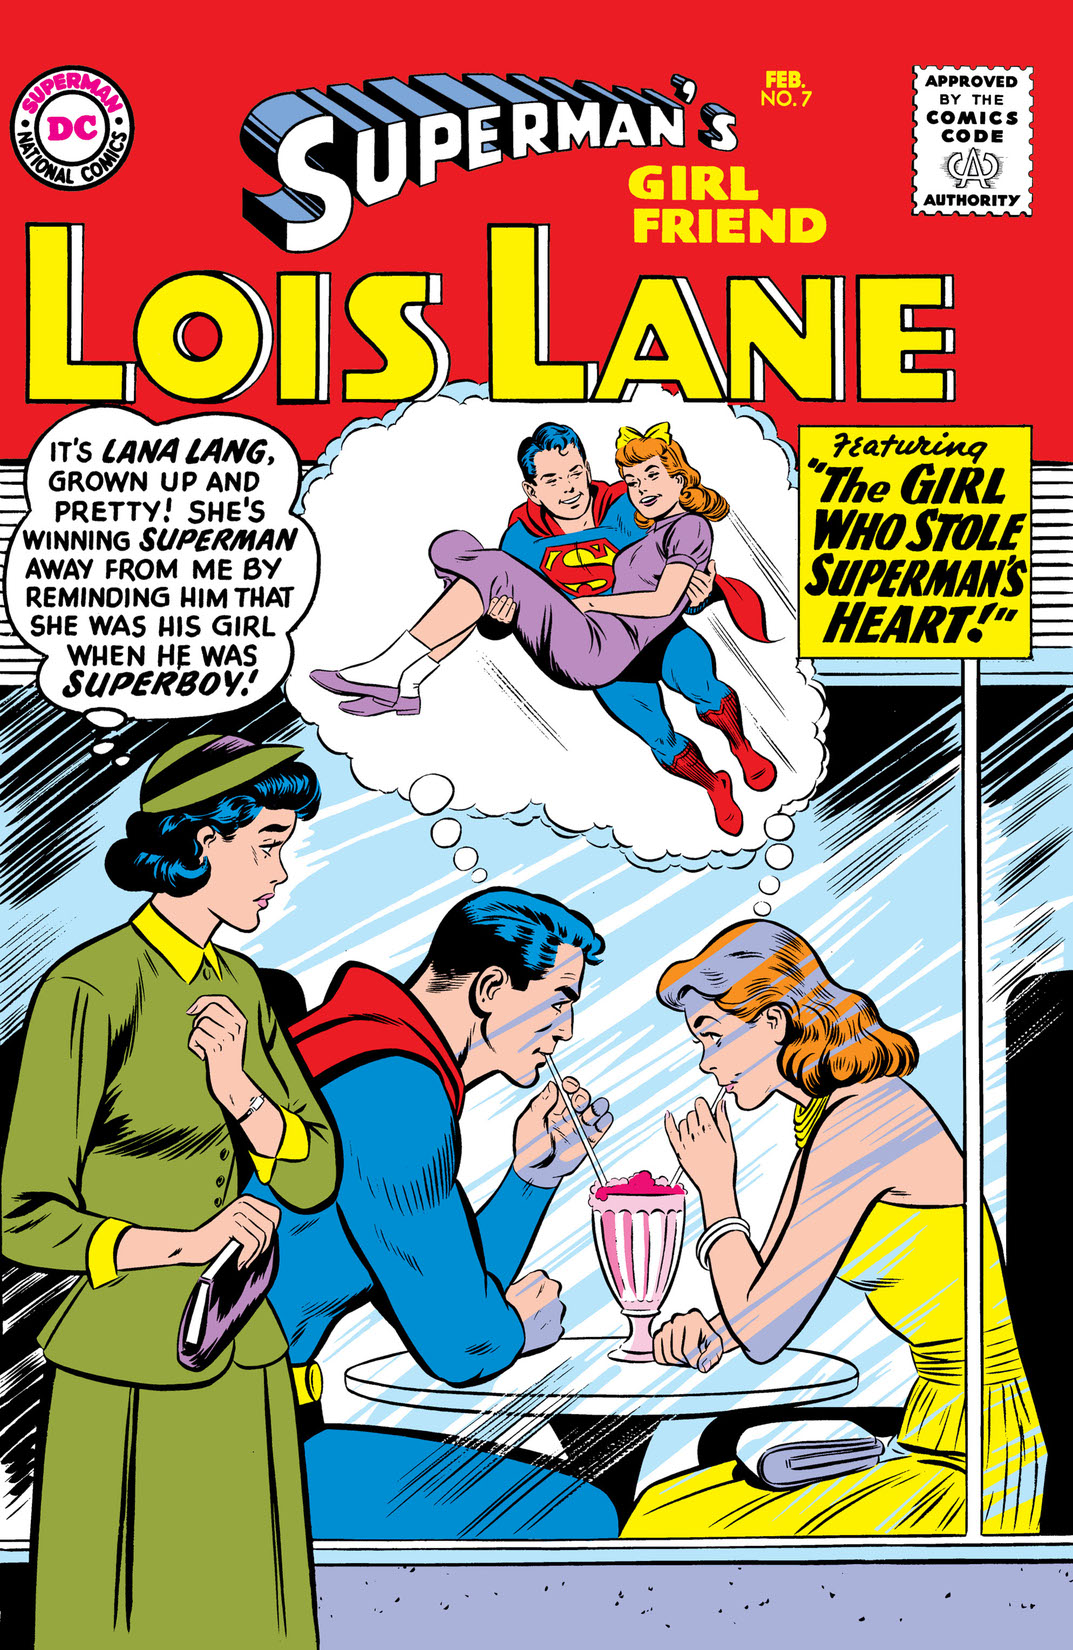 Superman's Girl Friend Lois Lane #7 preview images